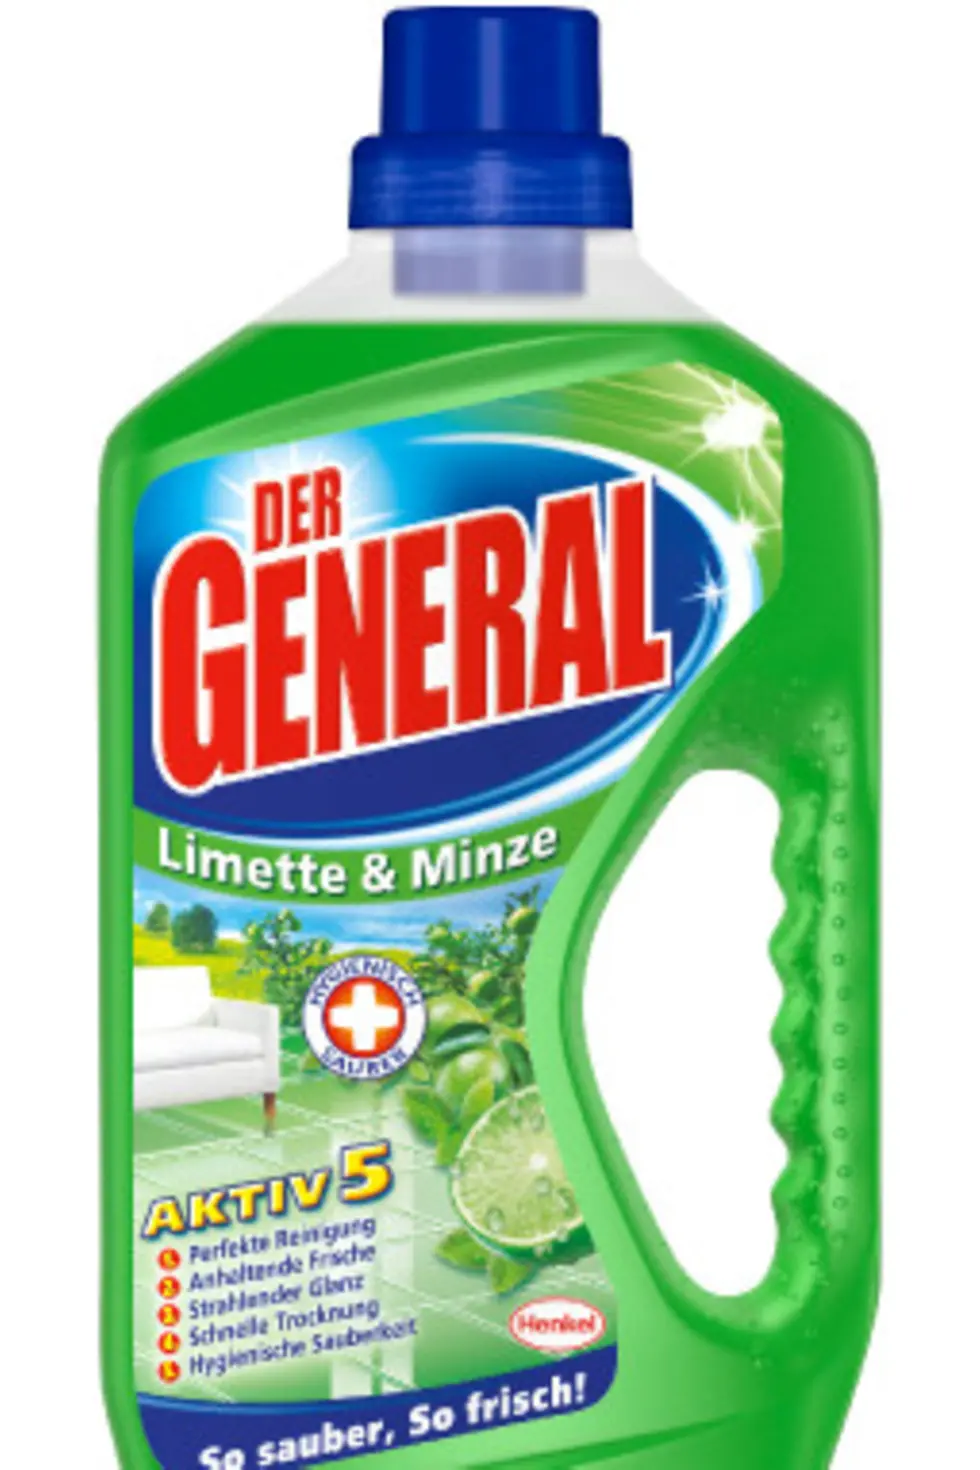 Der General Limette & Minze